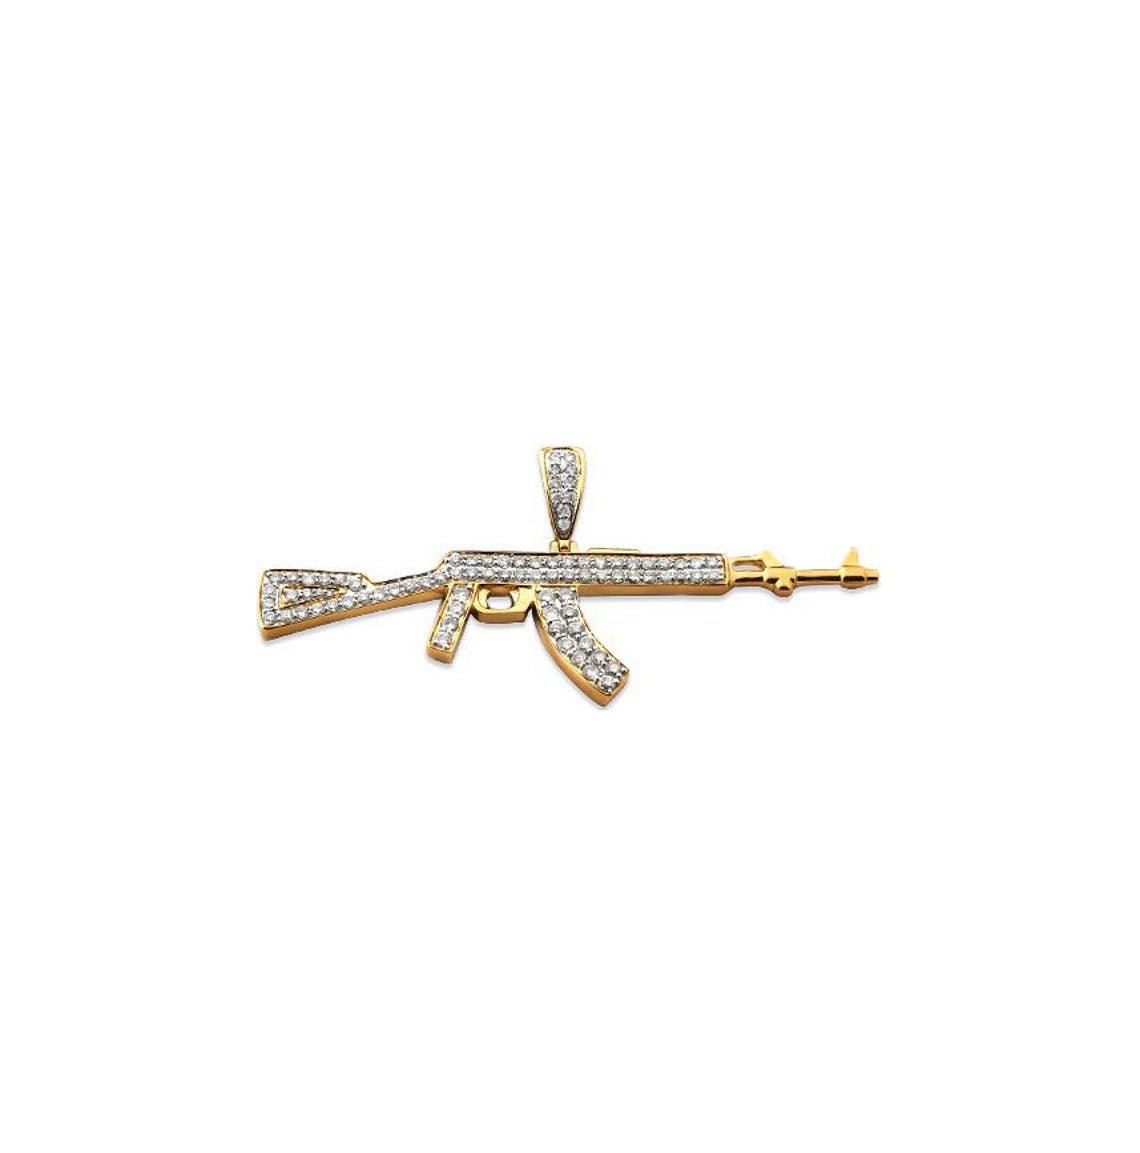 Draco AK-47 Gun Diamond Charm Pendant in 14k or 18k Gold | Uverly - UVERLY